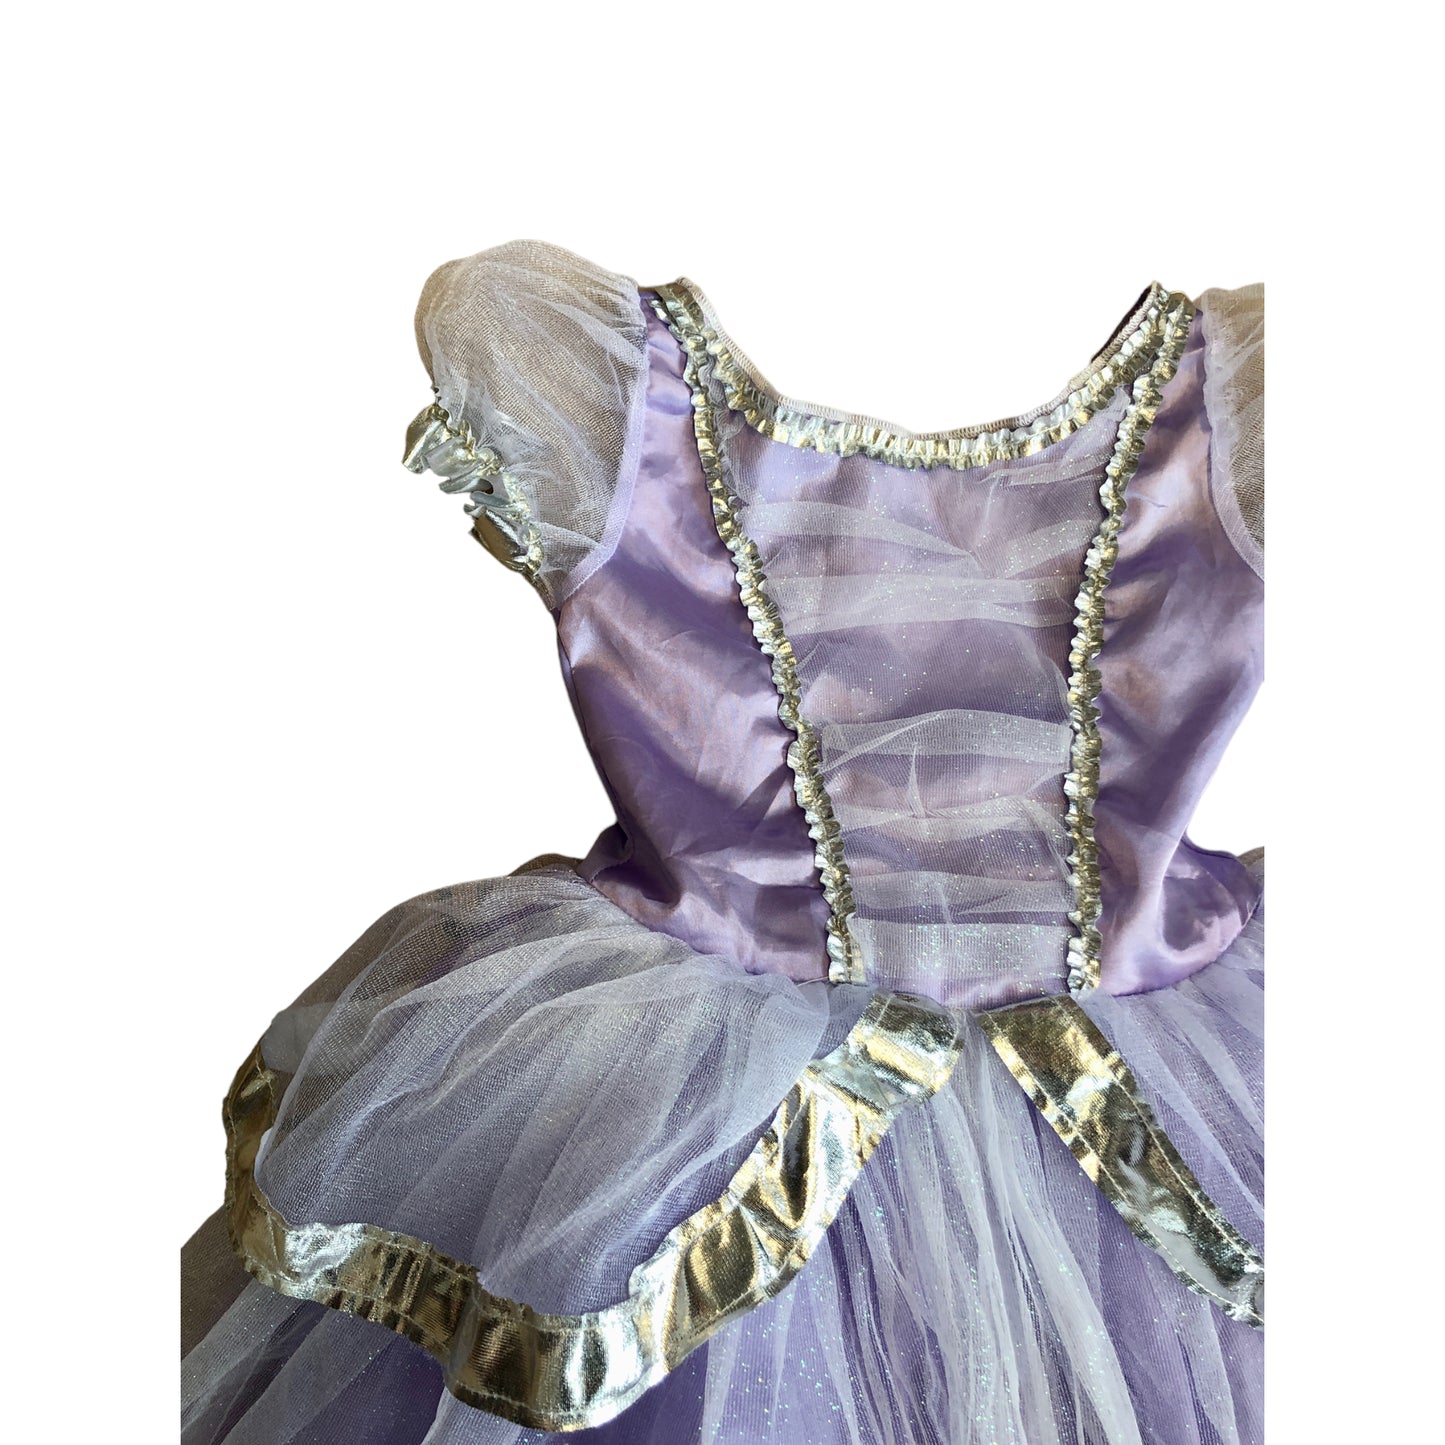 Purple Princess Dress (3/4 years old)